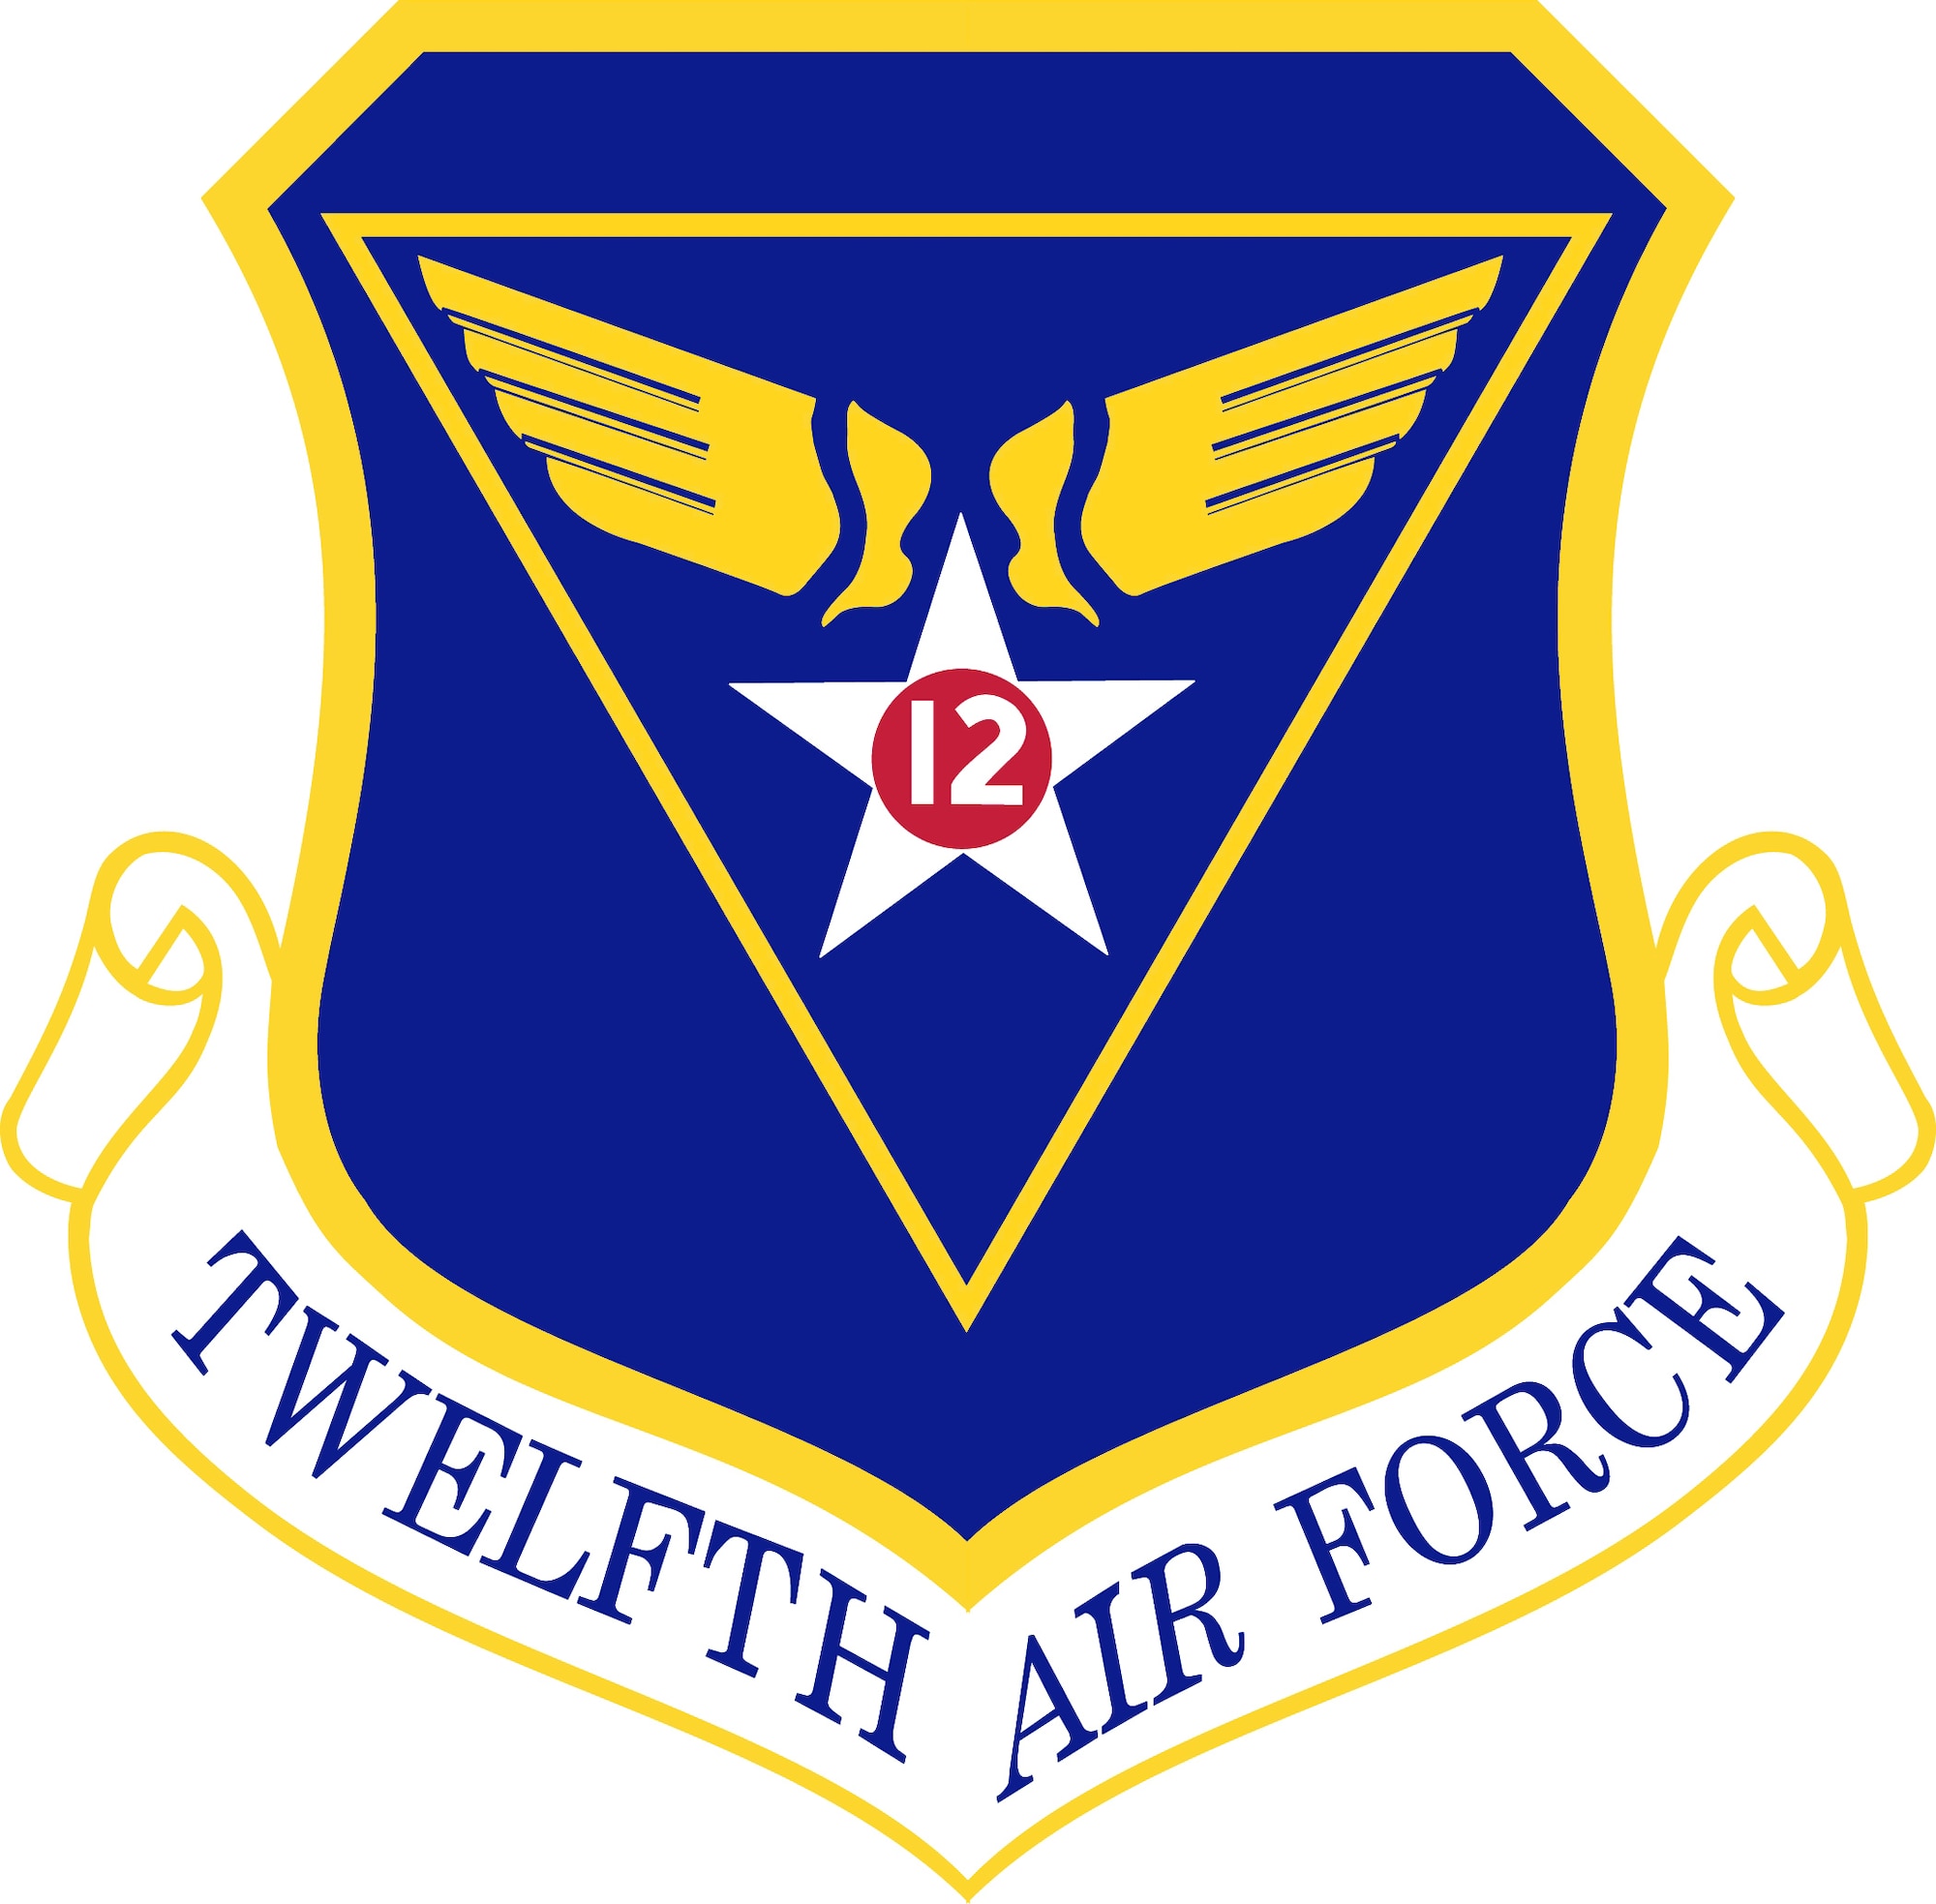 Twelfth Air Force shield